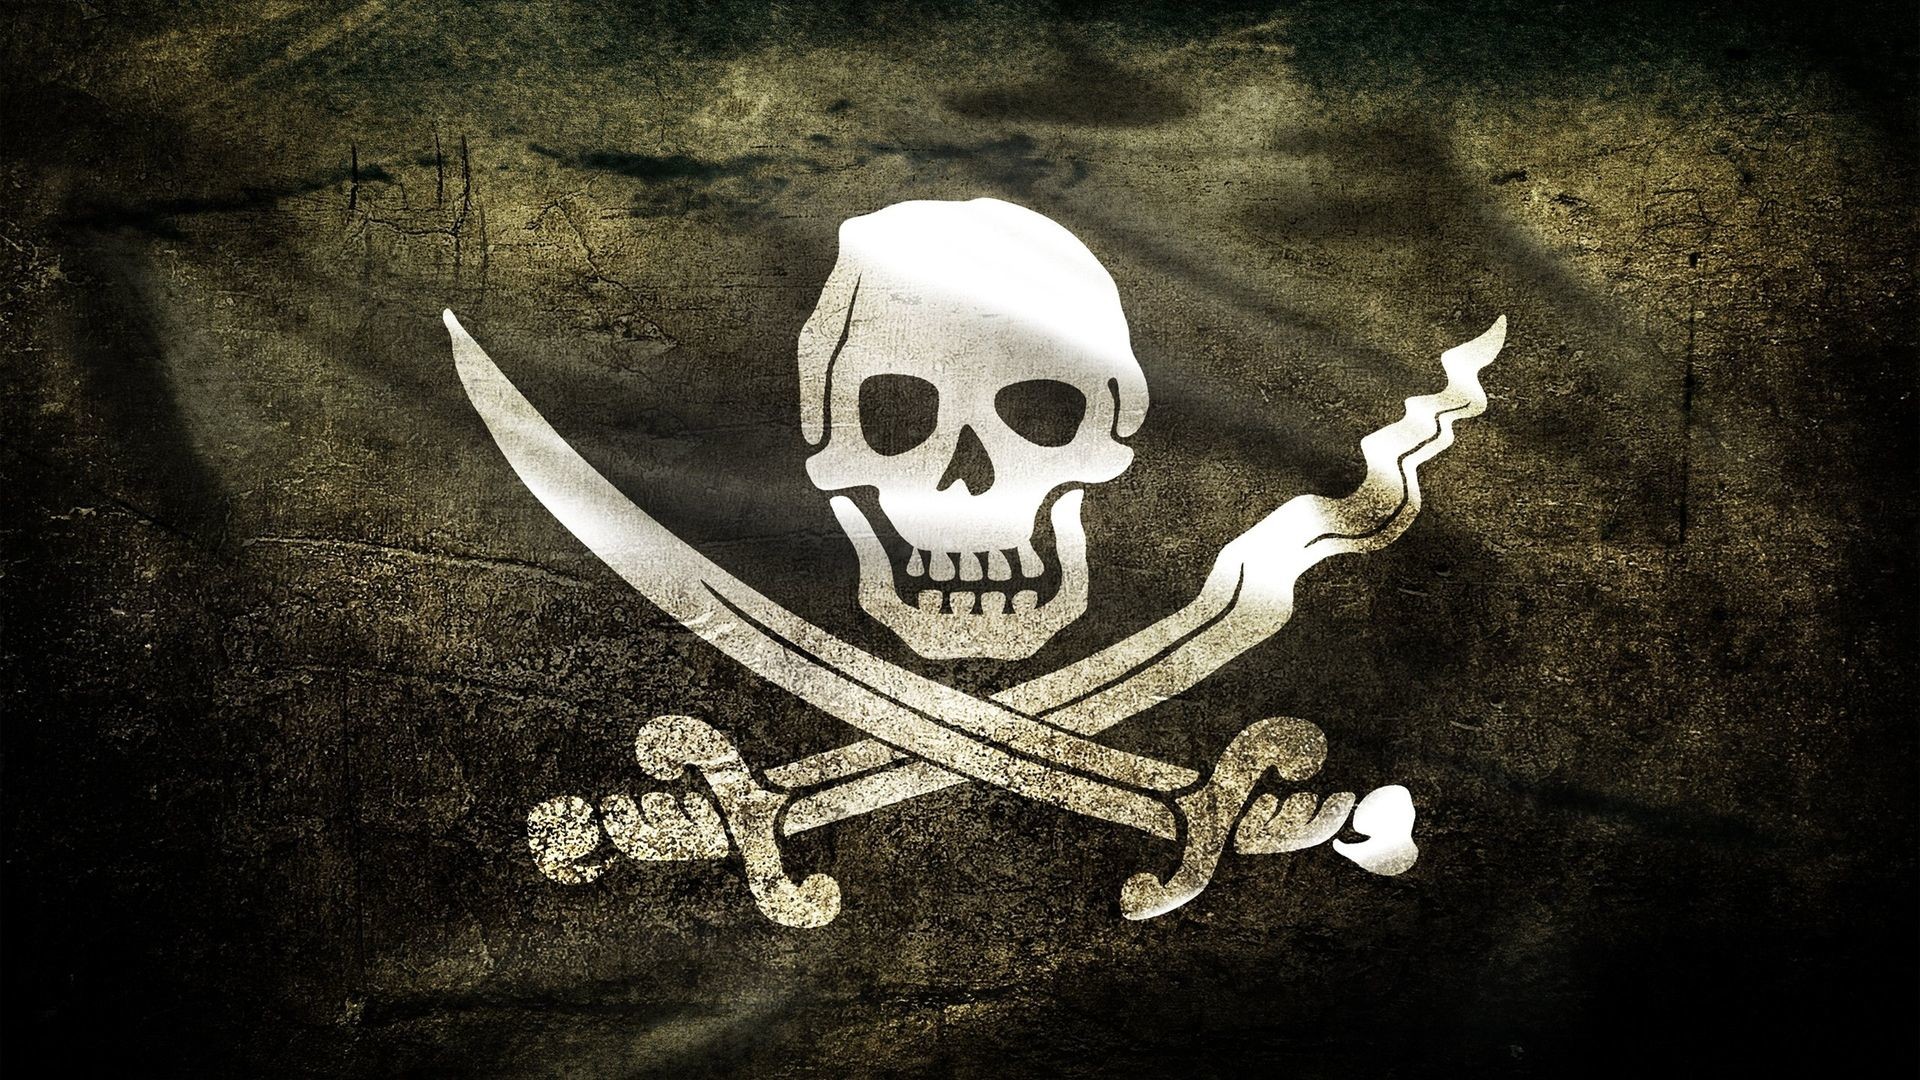 Pirate Skull Wallpapers